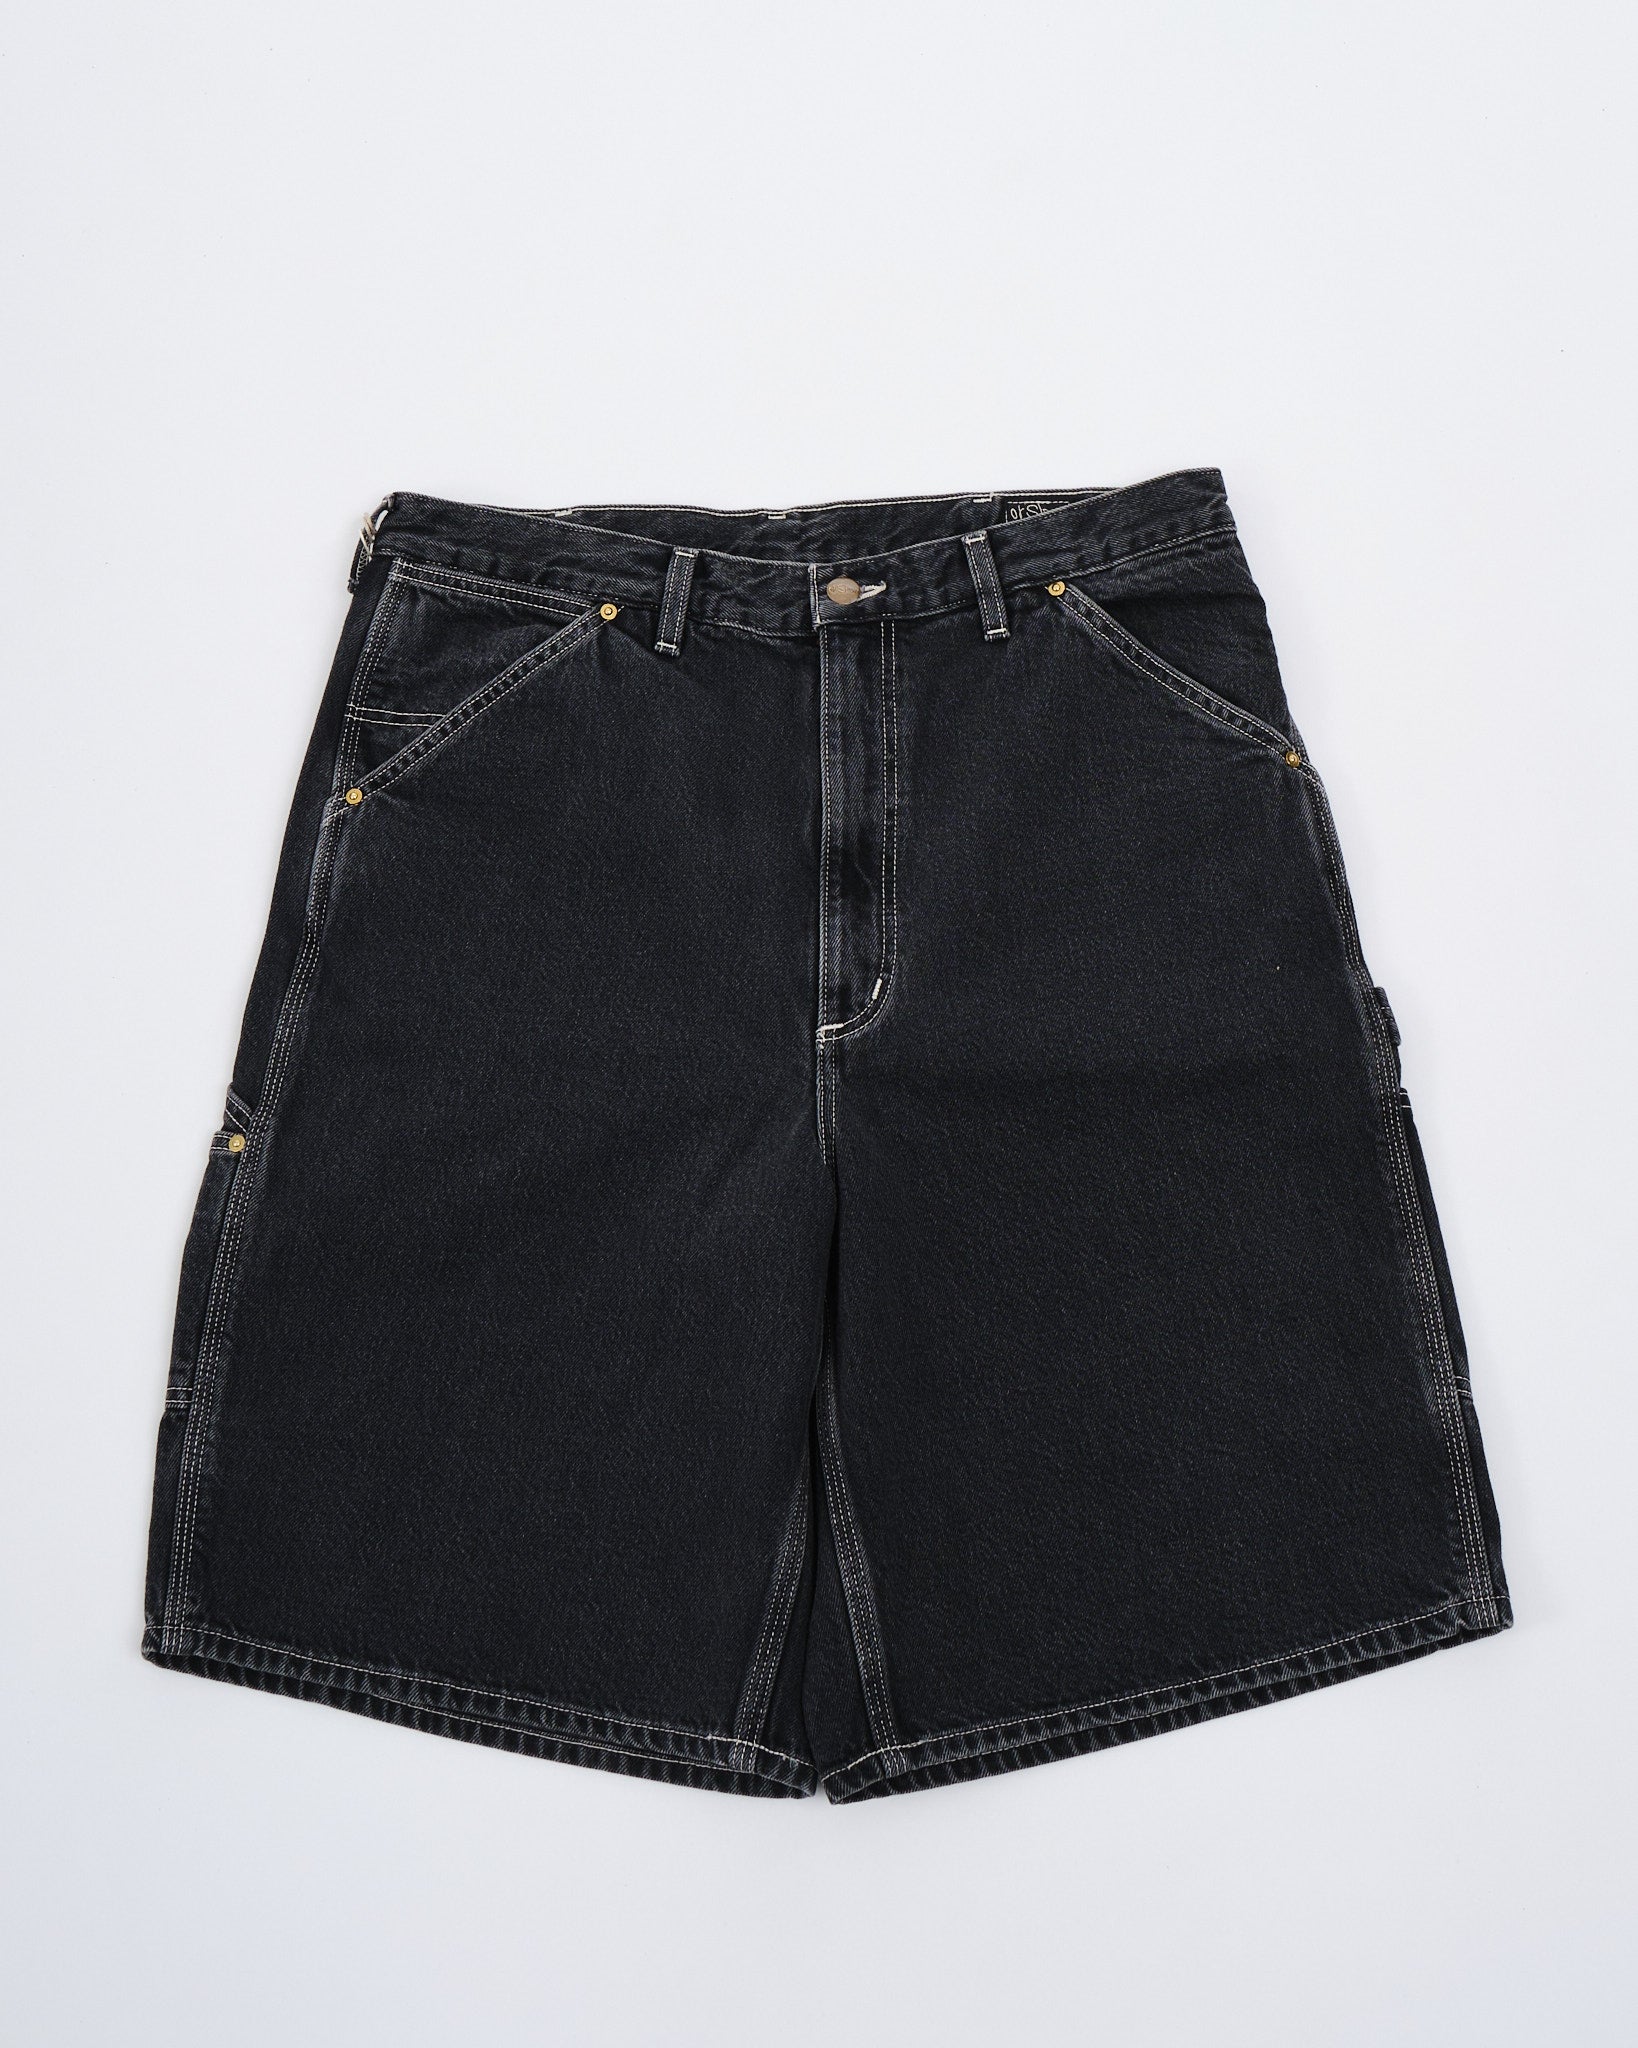 Shorts & Skirts | Hot Denim Shorts | Freeup